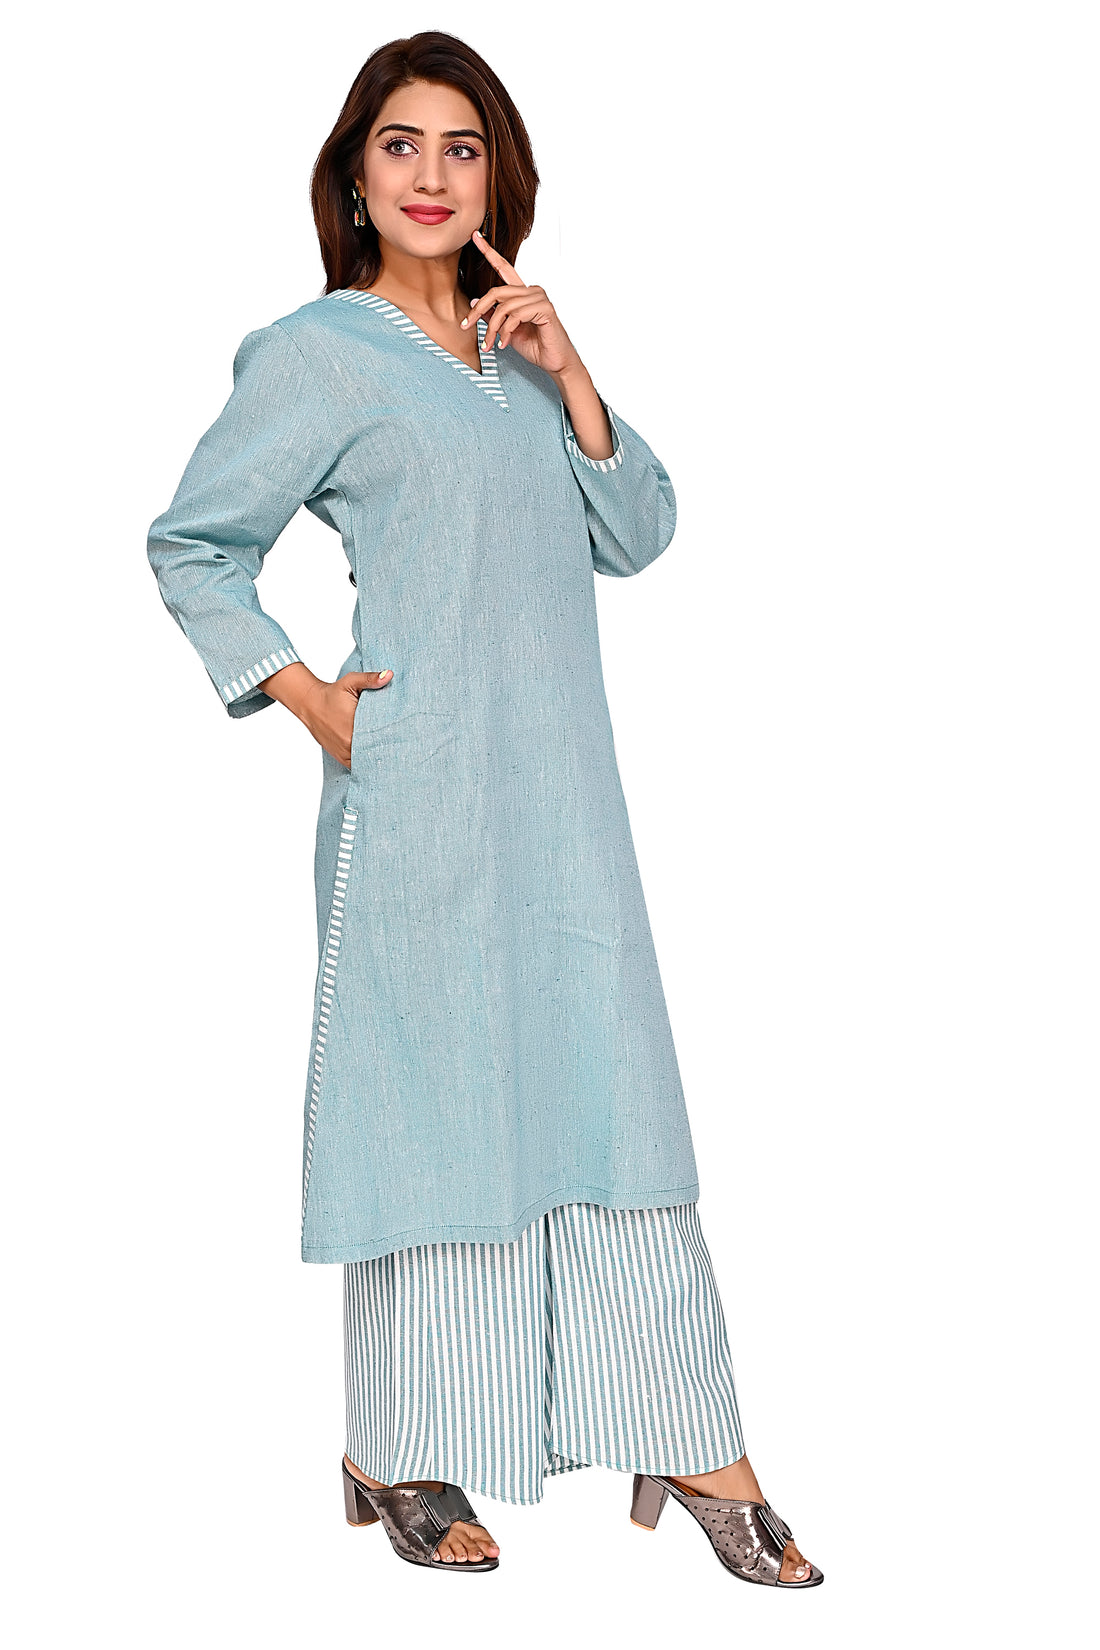 Nirmal online Premium cotton coord set kurti for Women in Green colour